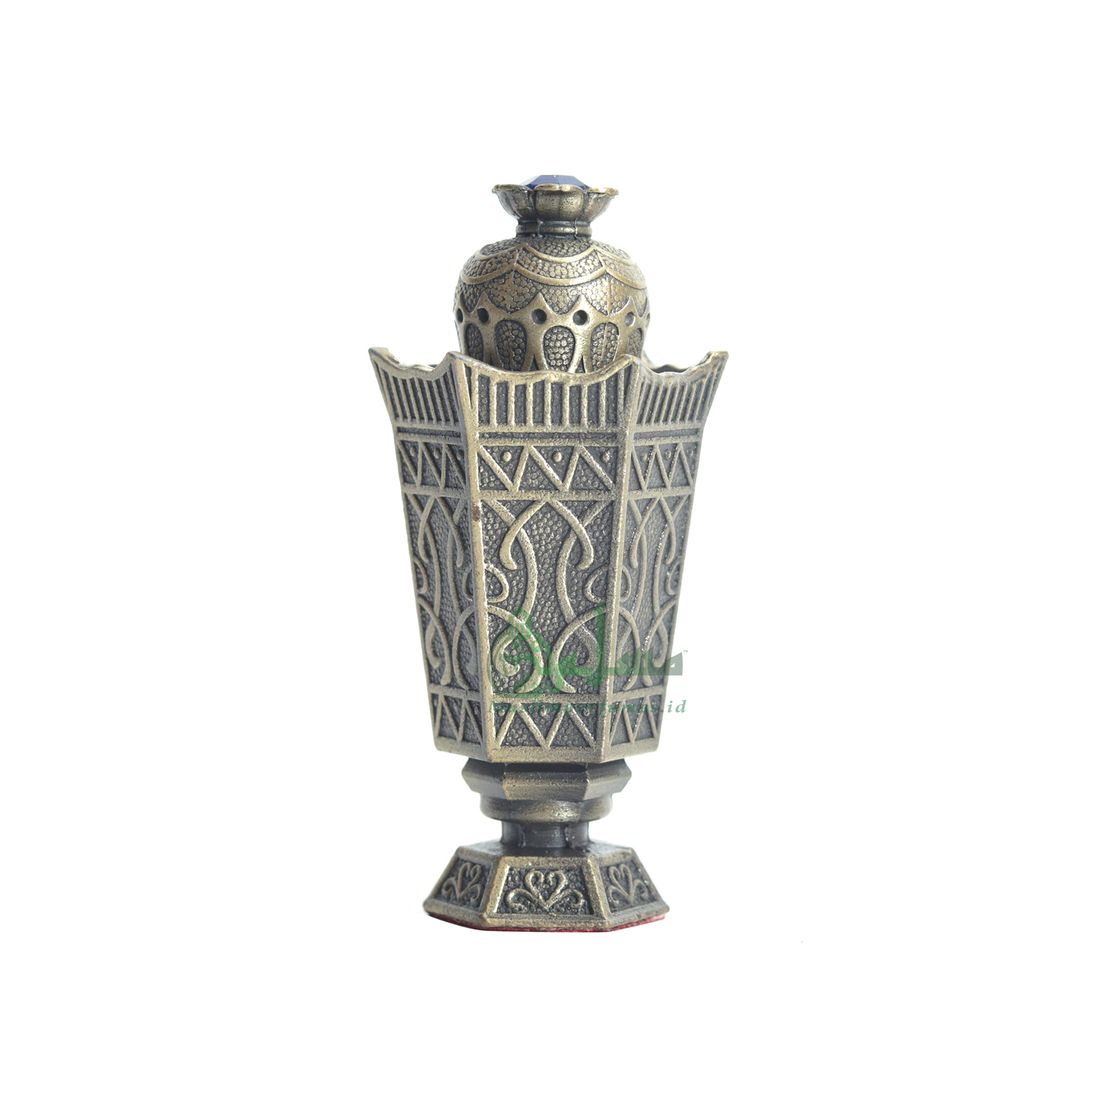 Arabian Vase Islamic DESIGN Brass Color SMALL EMPTY 2-ml Vial Bottle for Perfume Arab Prayer Attar Oud Oil, Pointed Glass Top Dipper Cap